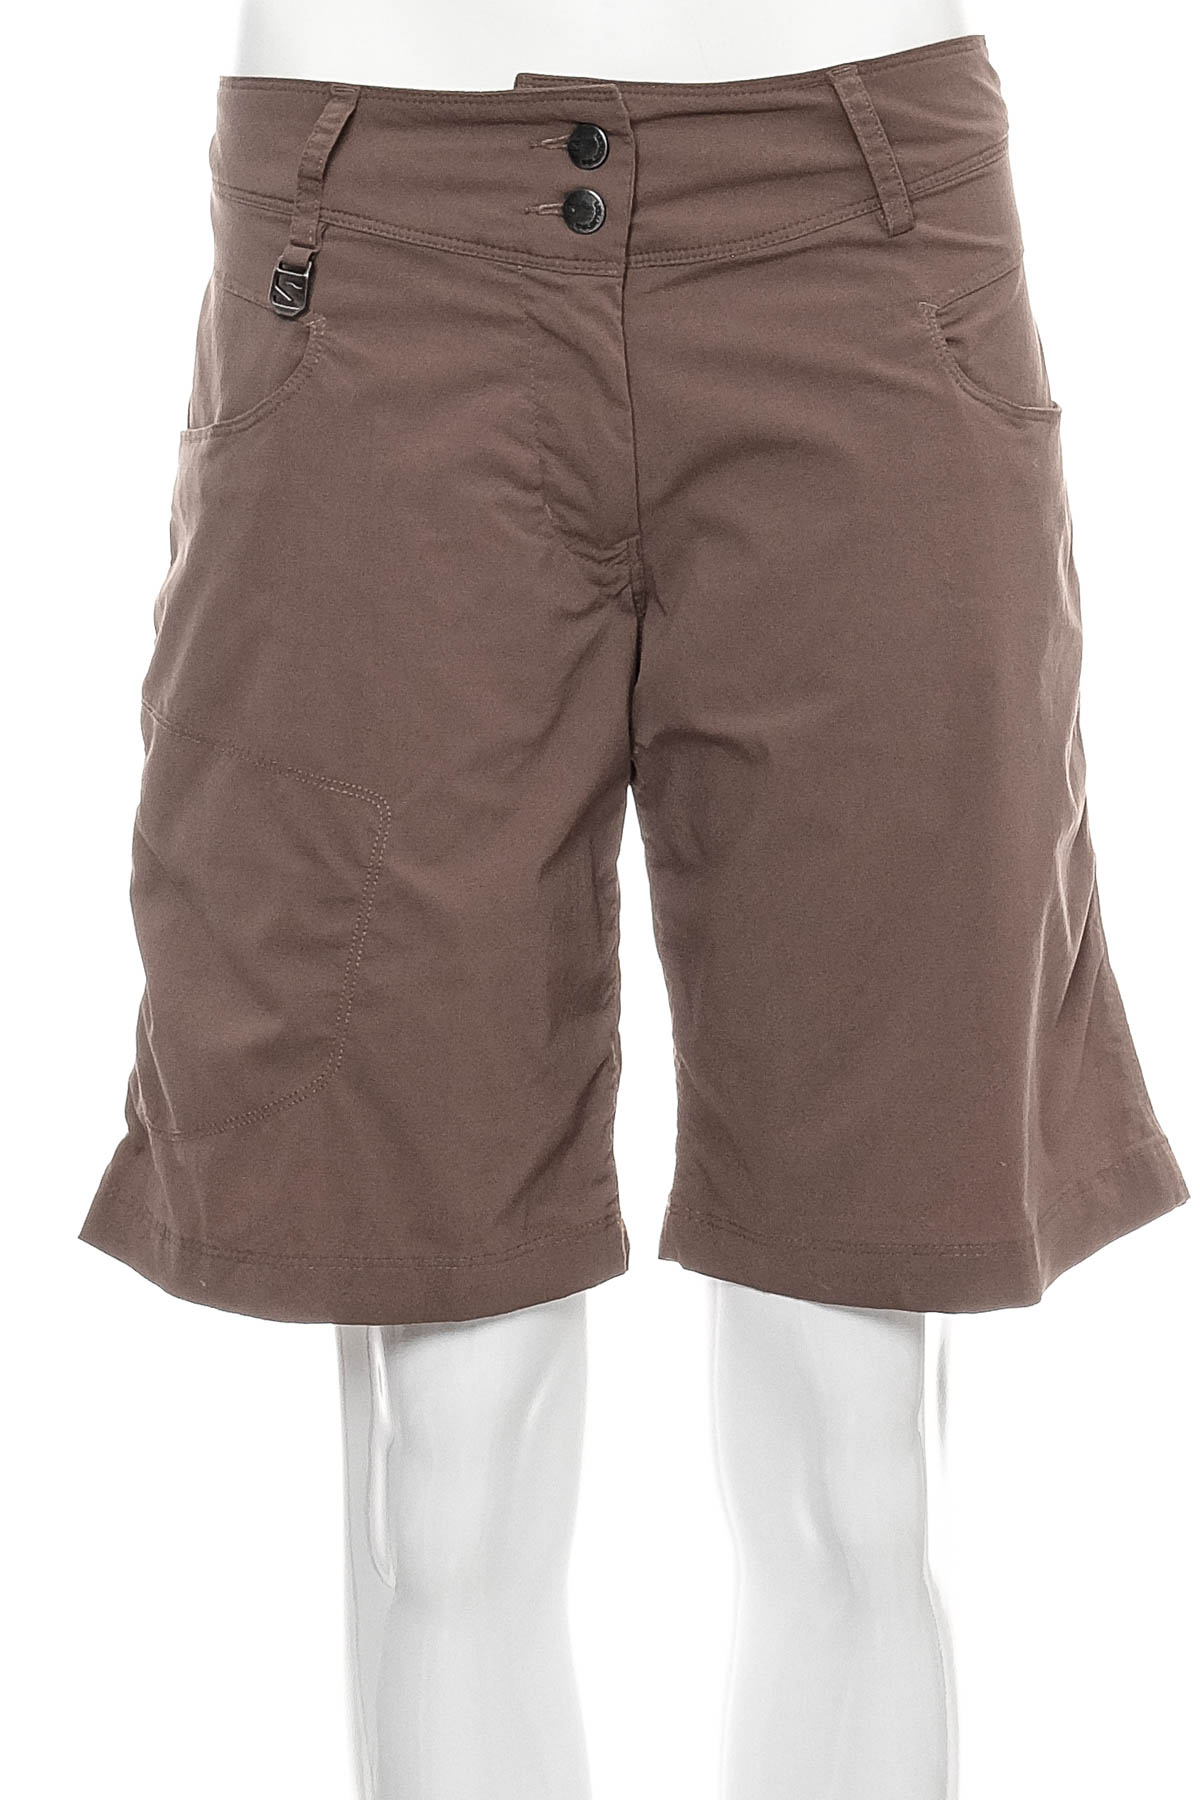 Female shorts - Salomon - 0